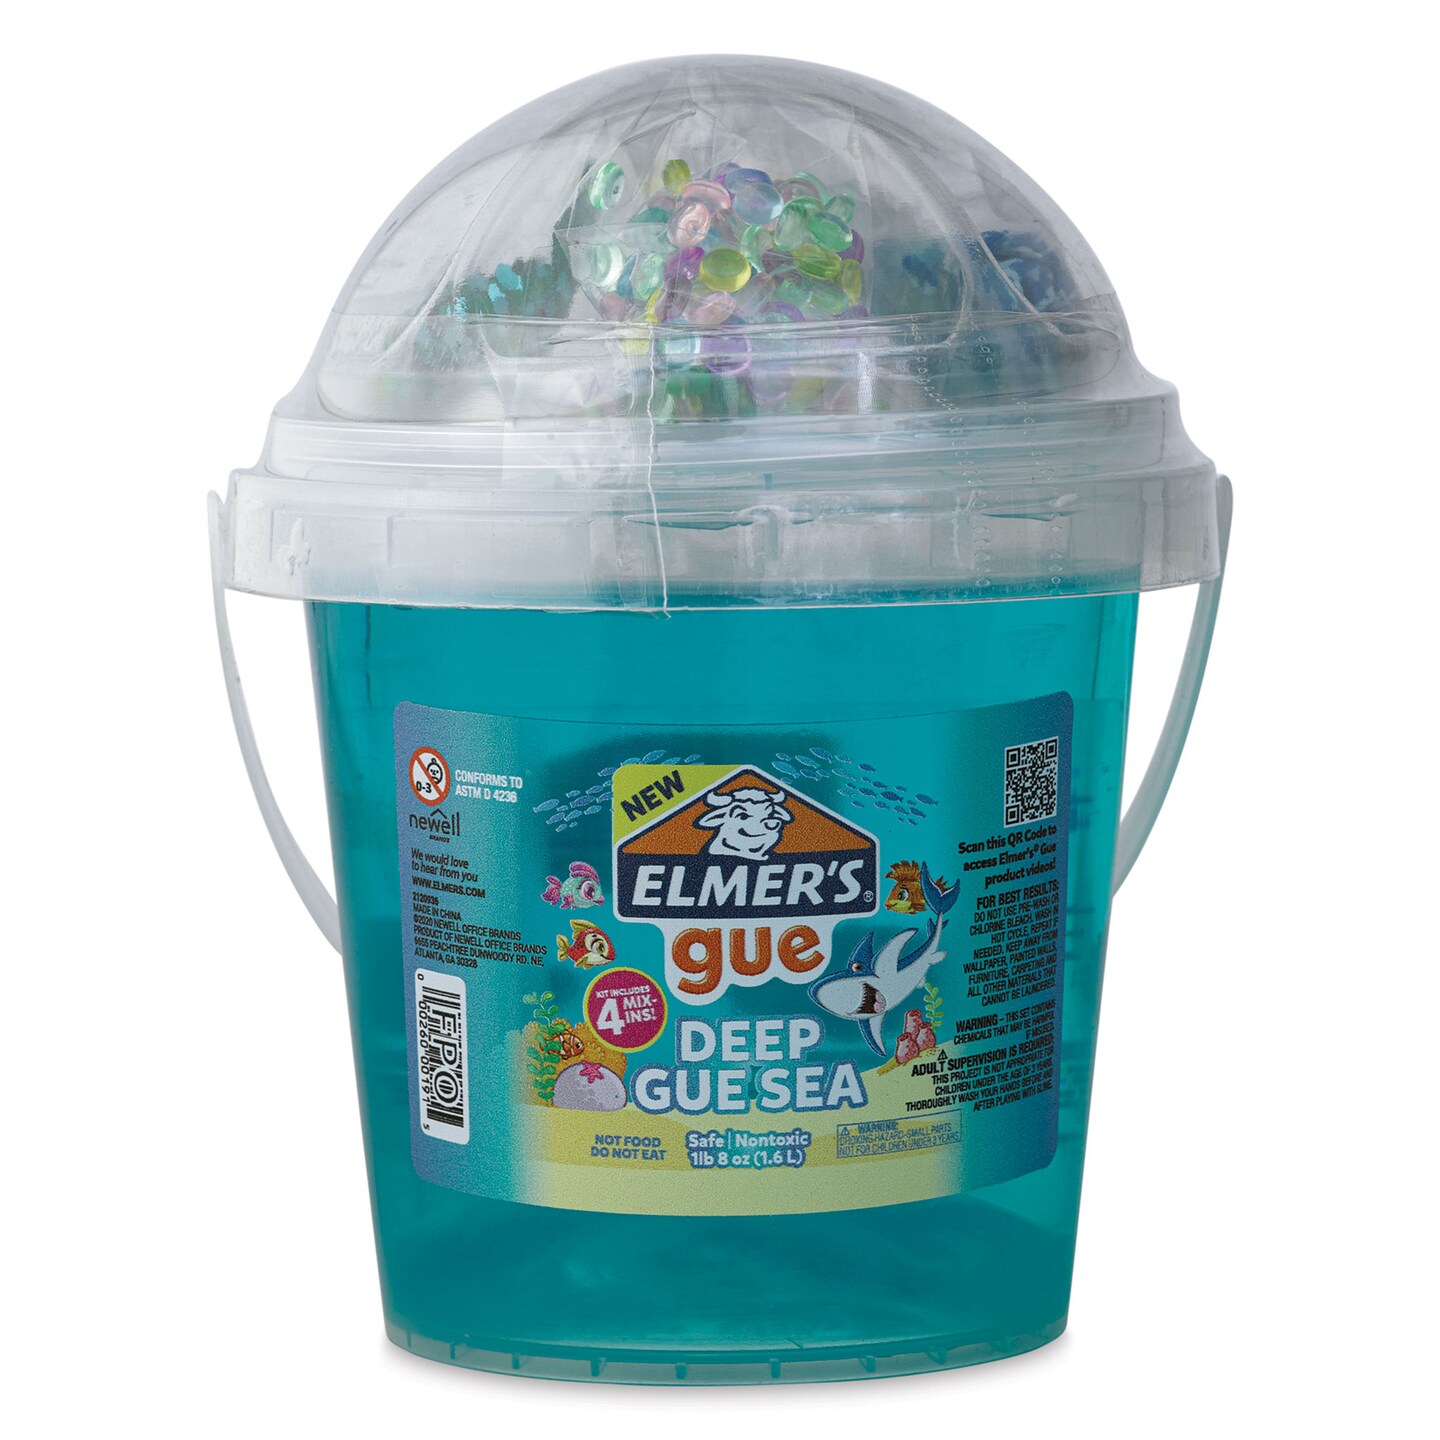 Elmer&#x2019;s Gue Premade Slime - Deep Gue Sea Bucket with Mix-Ins, 1-1/2 lb